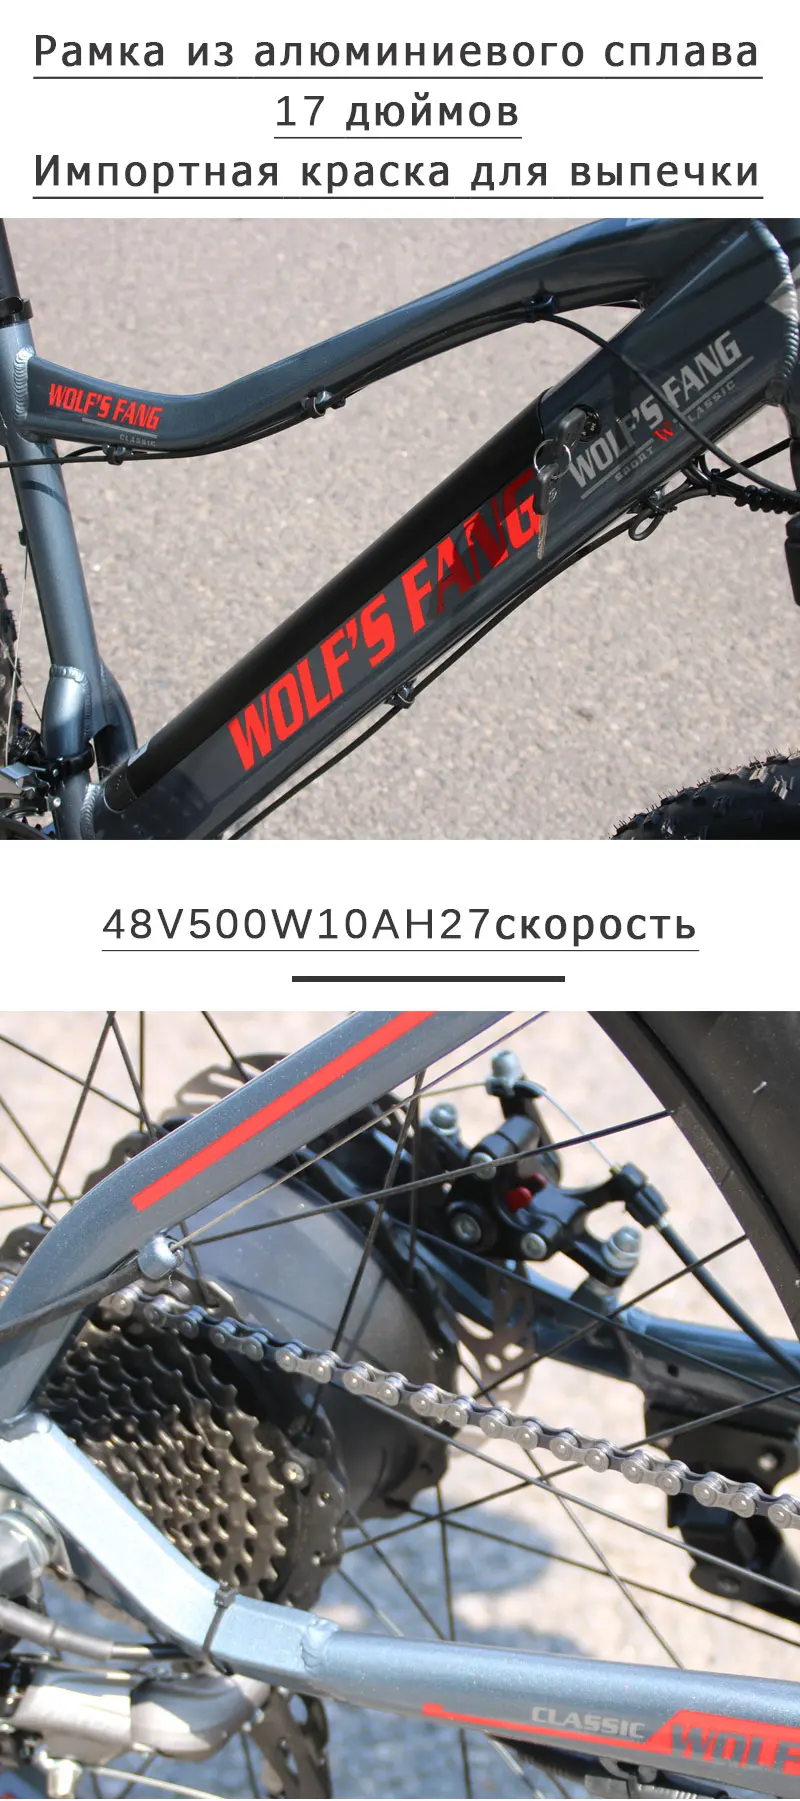 Электрический велосипед Ebike, 27 скоростей, 10AH, 48 В, 500 Вт, E велосипед, 26*4,0, горные велосипеды, толстый велосипед, дорожный электрический велосипед, алюминиевый сплав